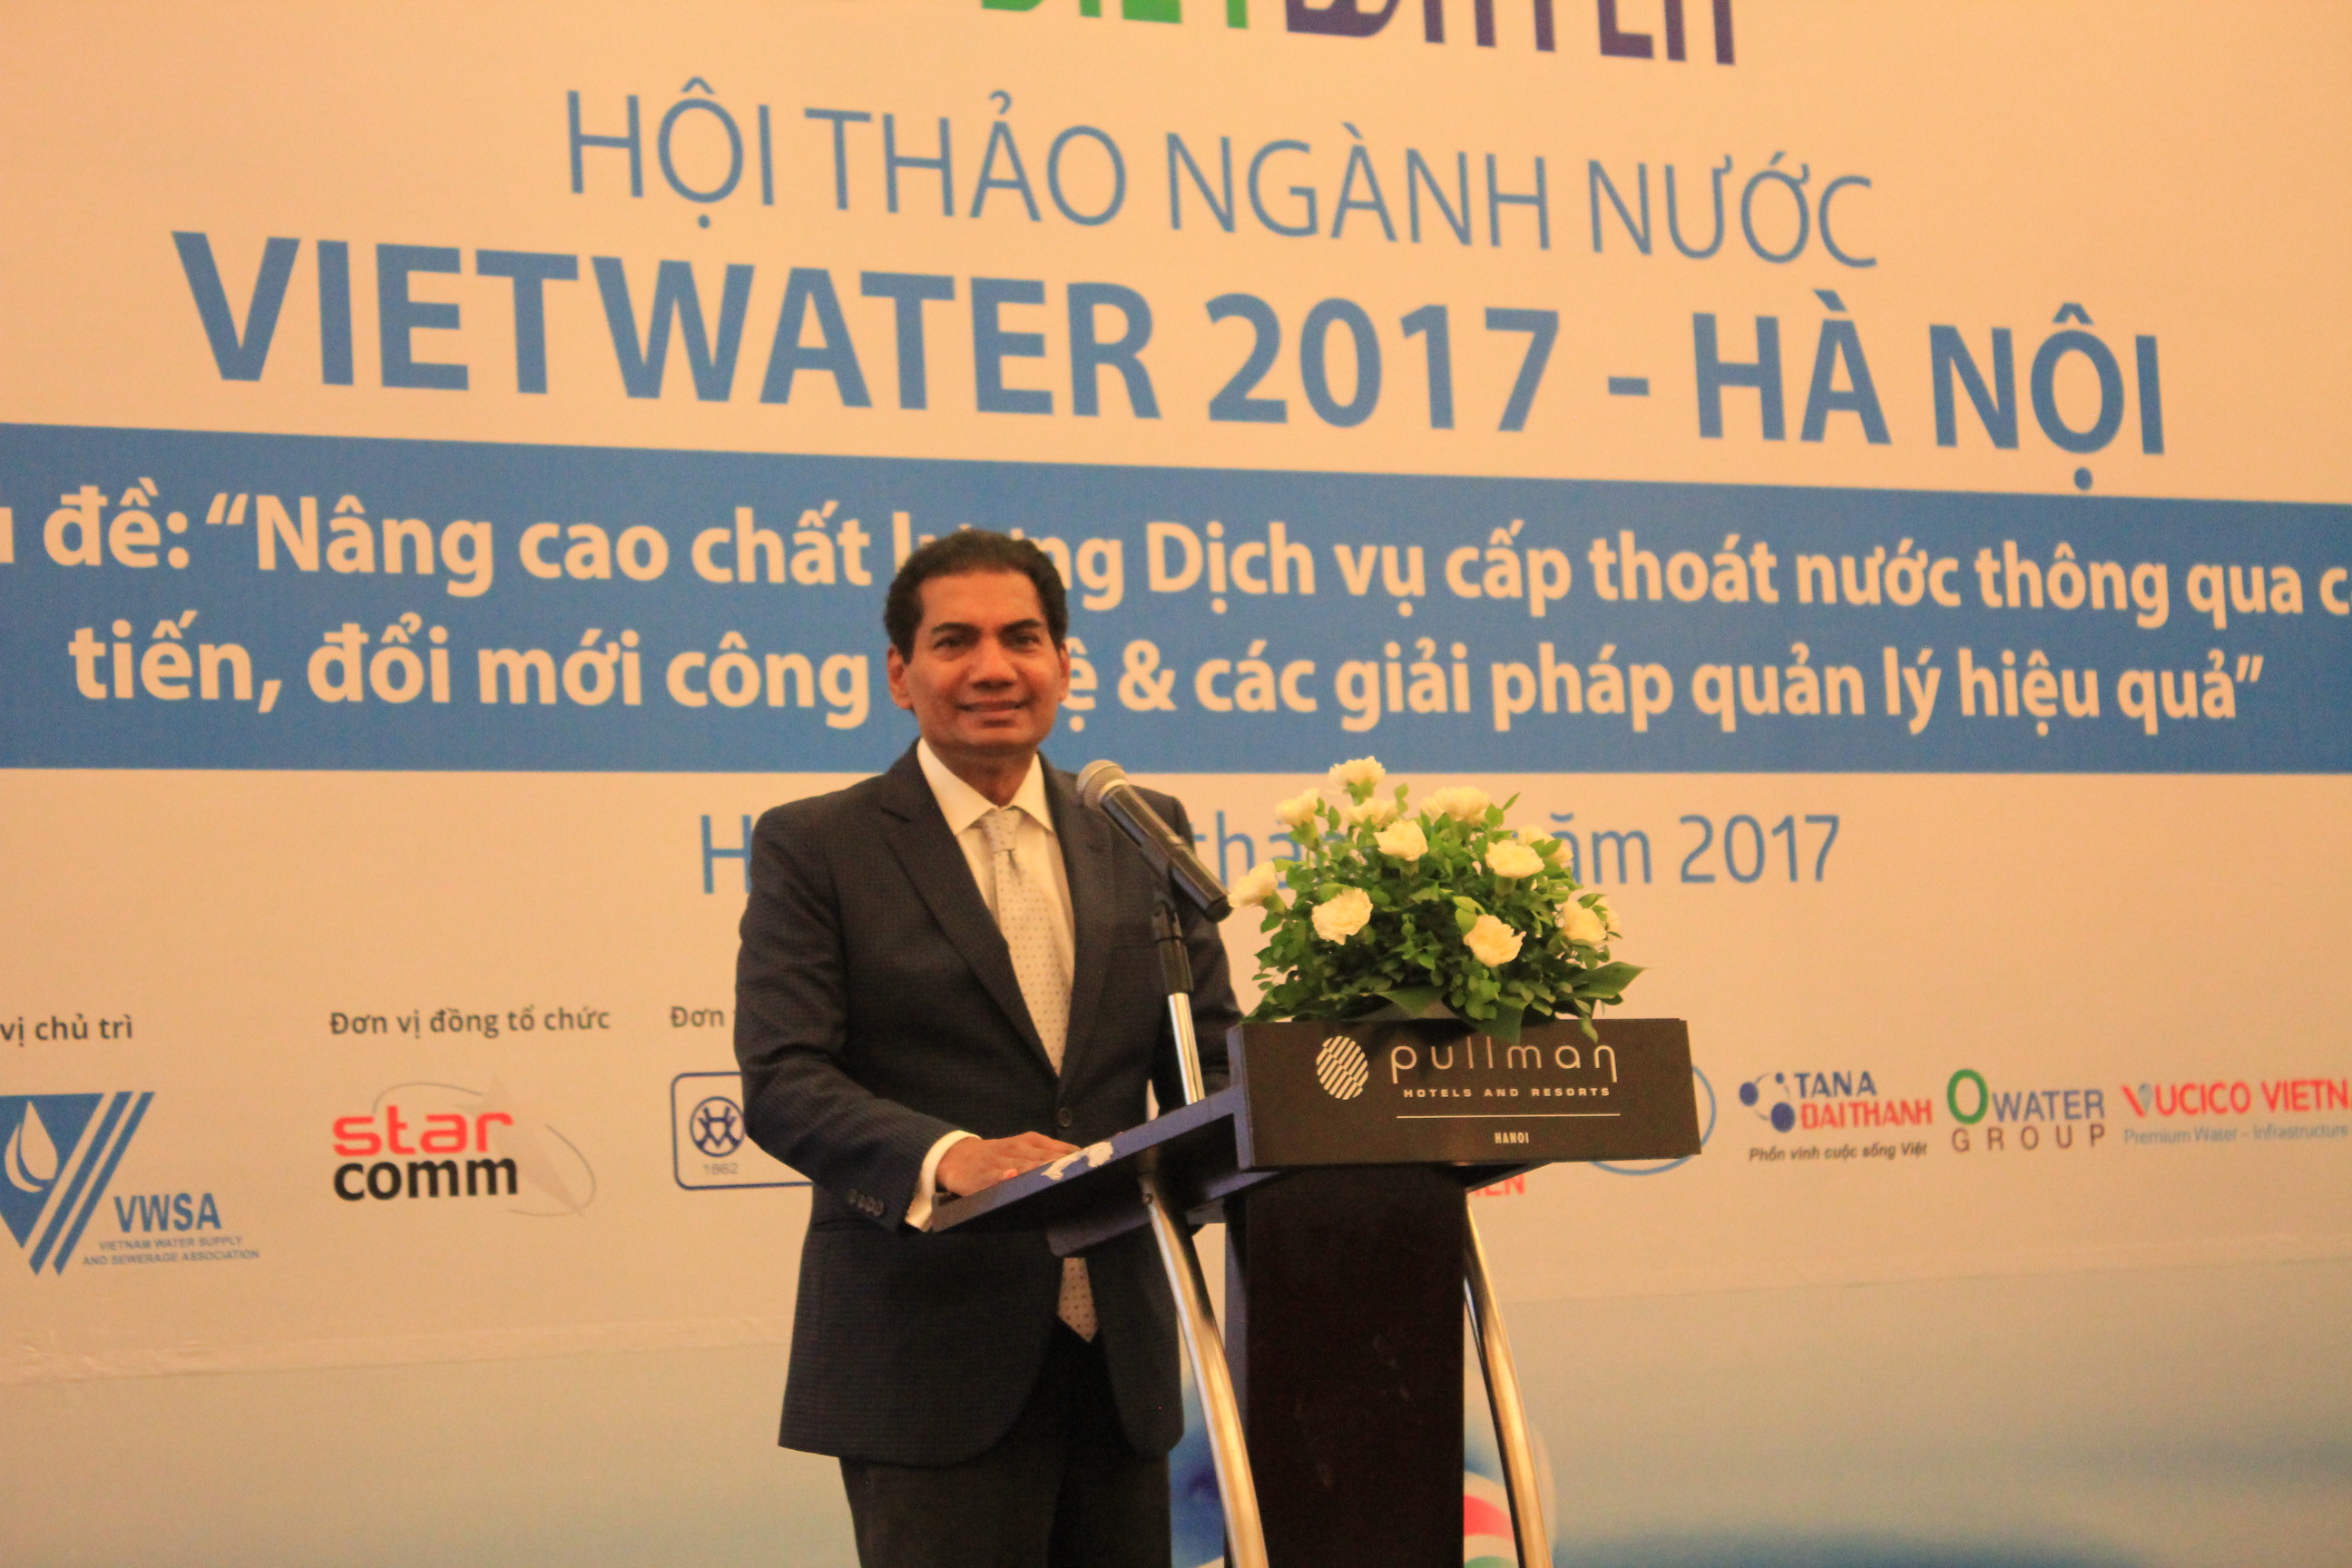 vietwater 2017 kicked off in hanoi